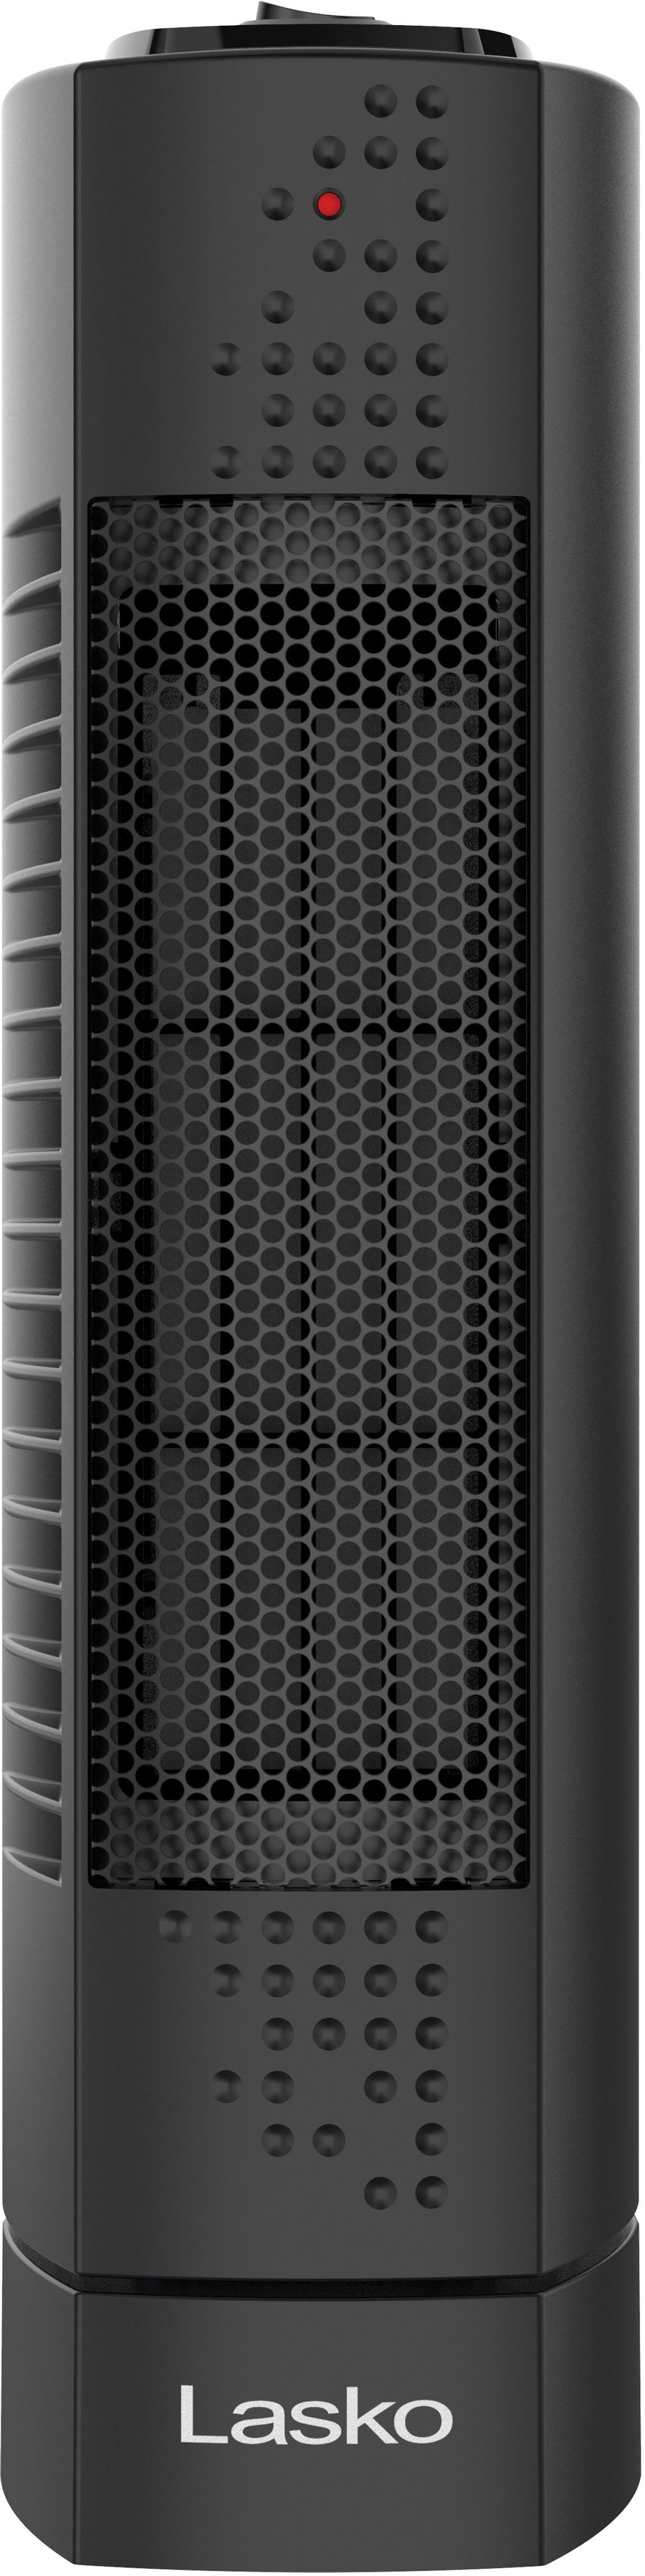 Lasko - 1500-Watt Ultra Slim Desktop Ceramic Tower Space Heater - Black_0